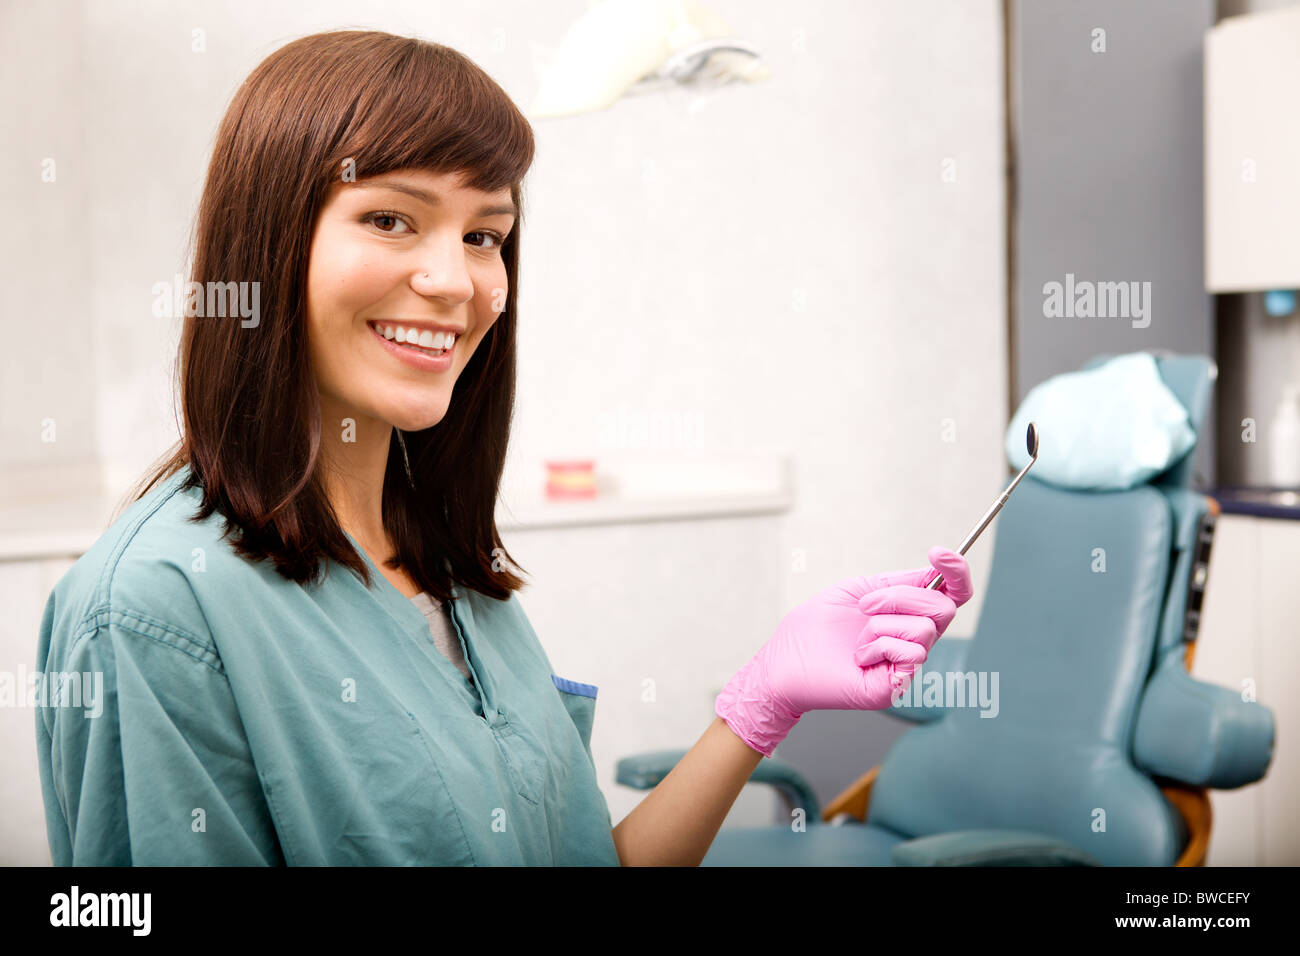 A woman dentist or dental hygienist portrait Stock Photo